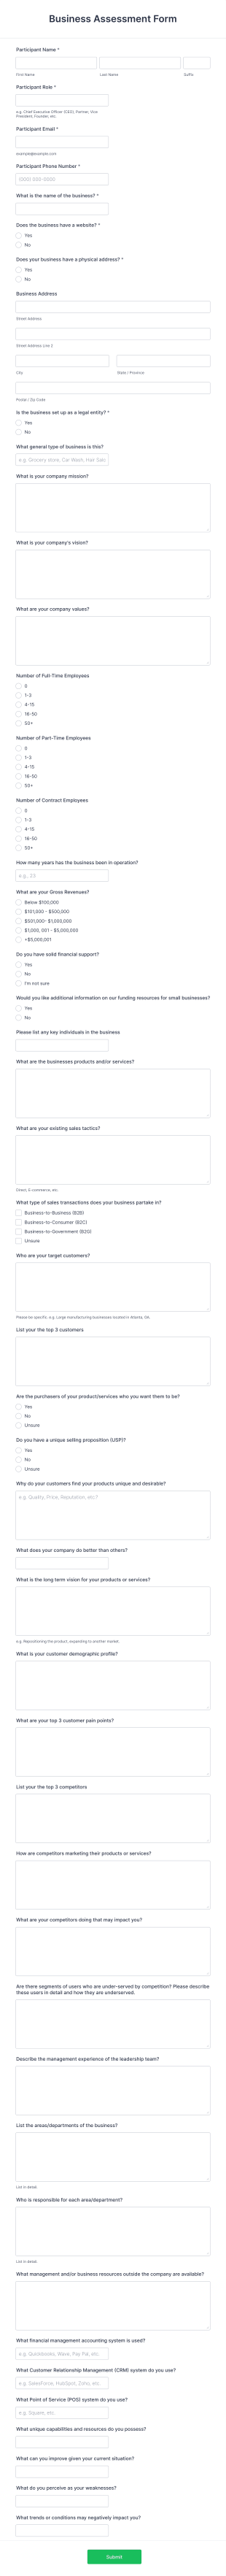 Business Client Assessment Form Template